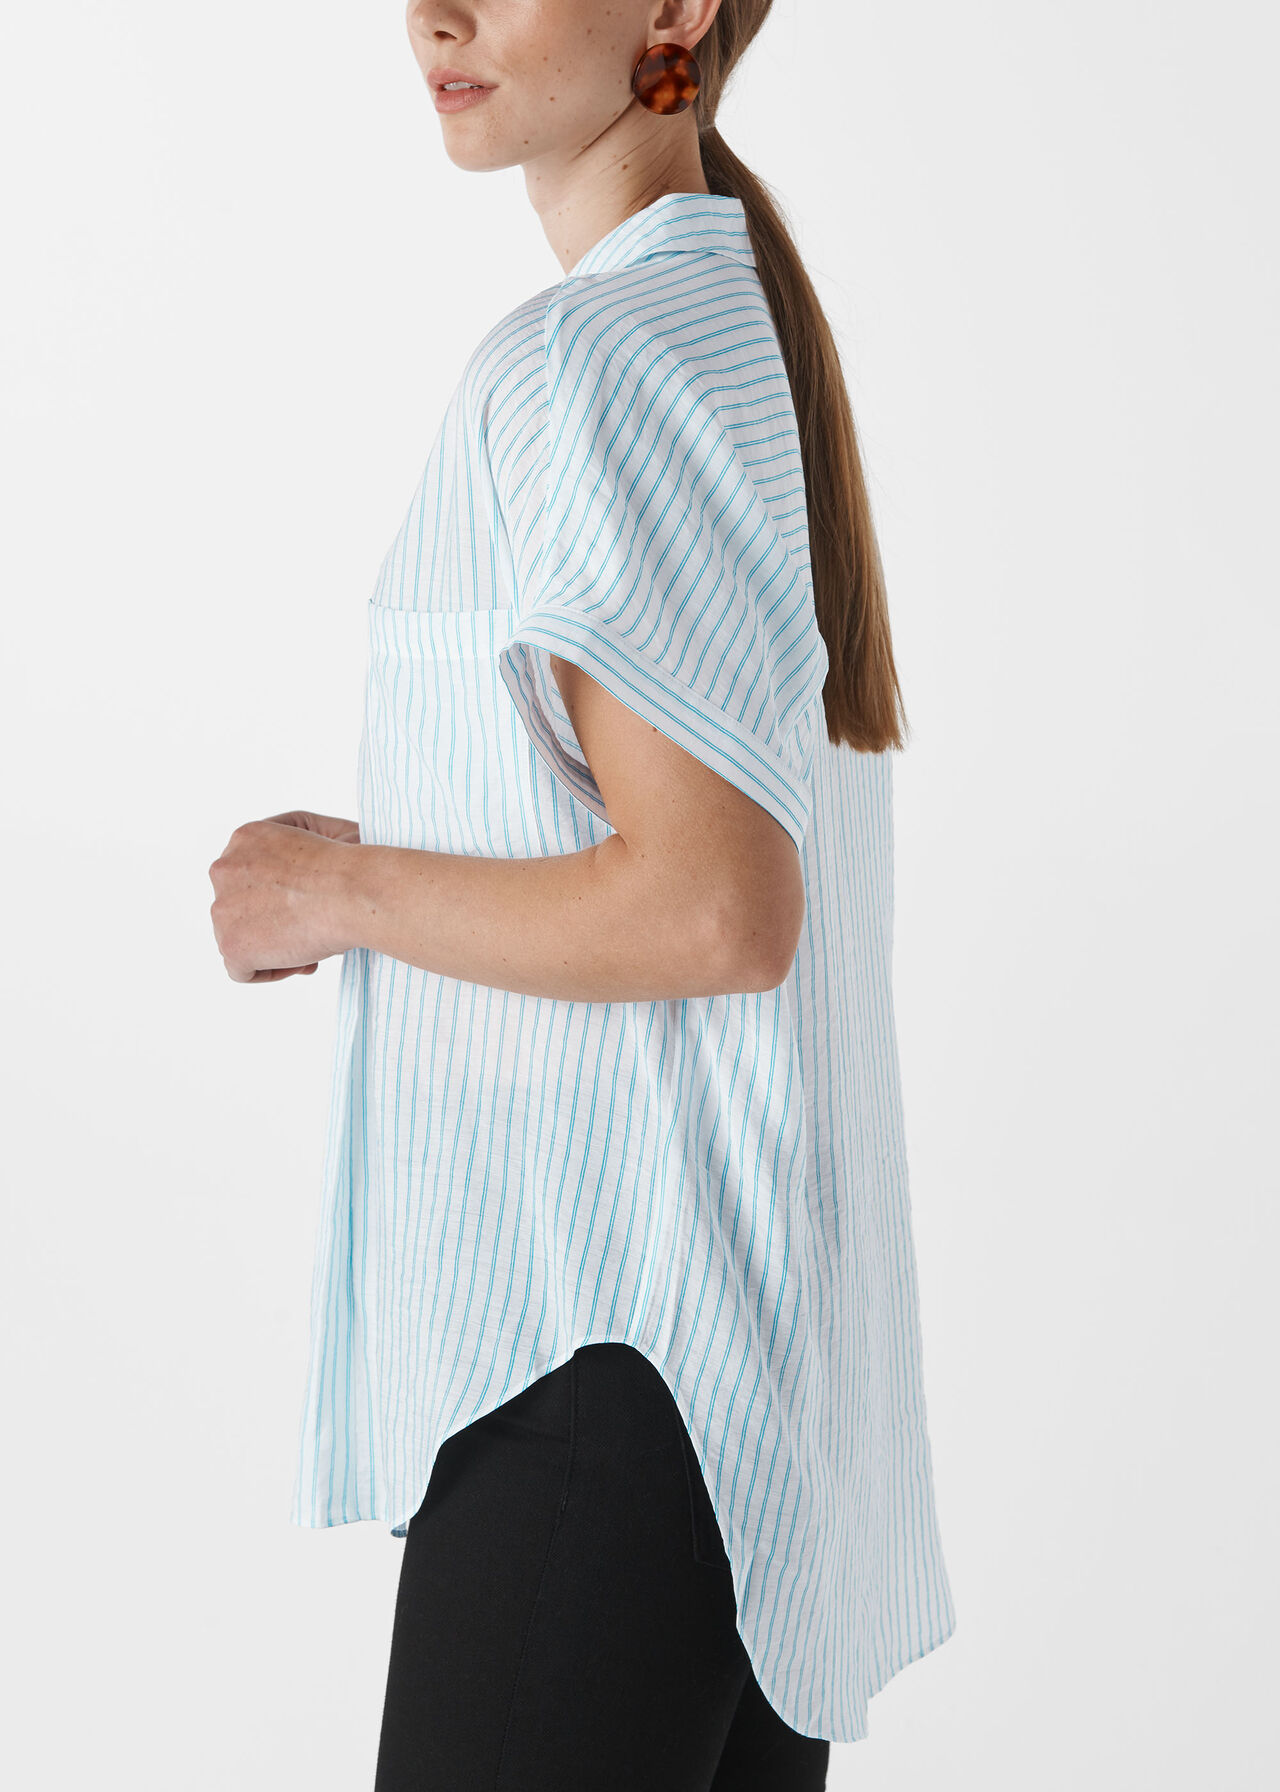 Lea Stripe Shirt White/Multi